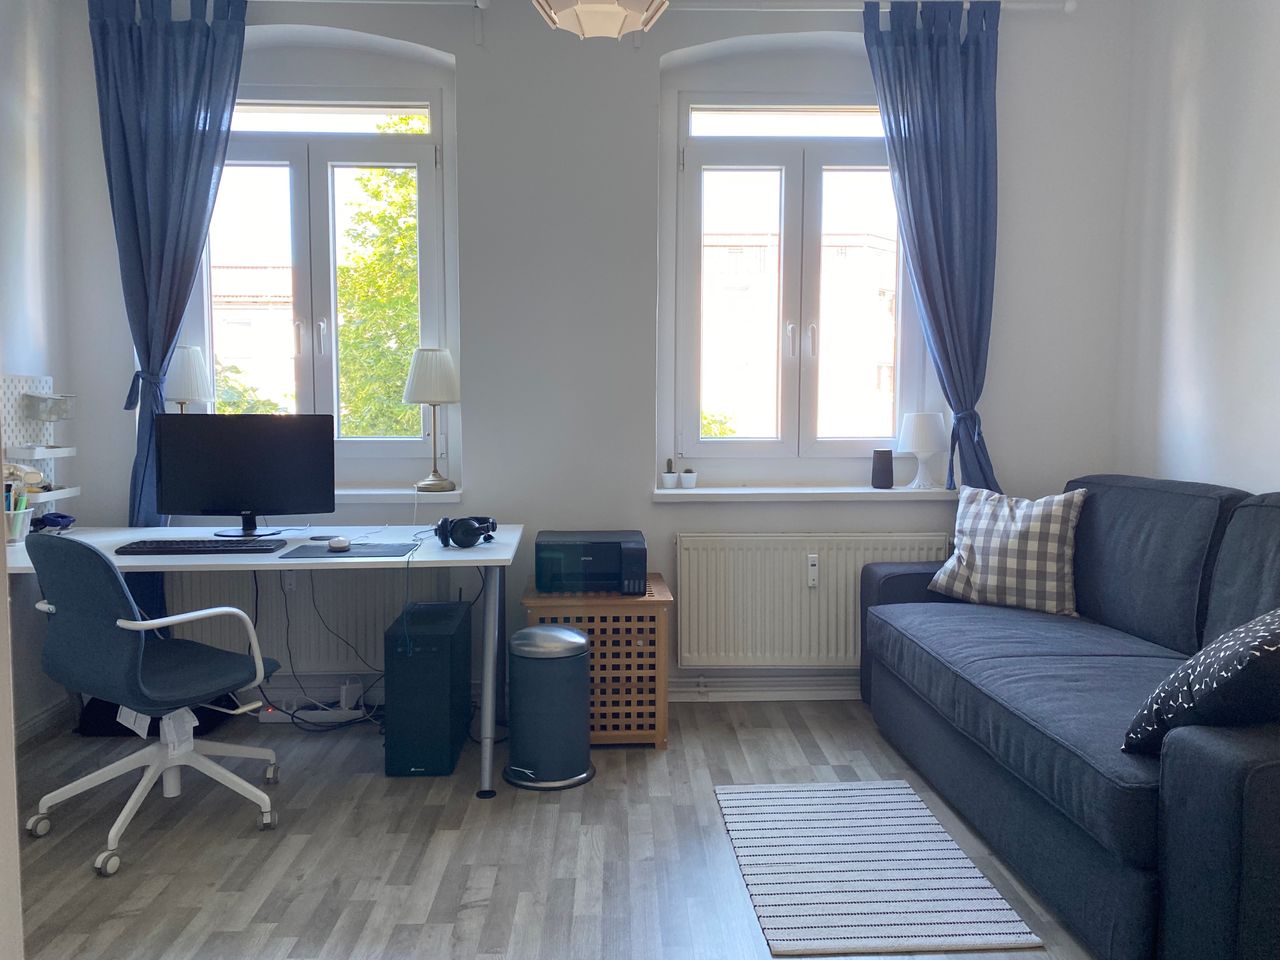 Nice flat in Friedrichshain (Boxhagenerkiez)